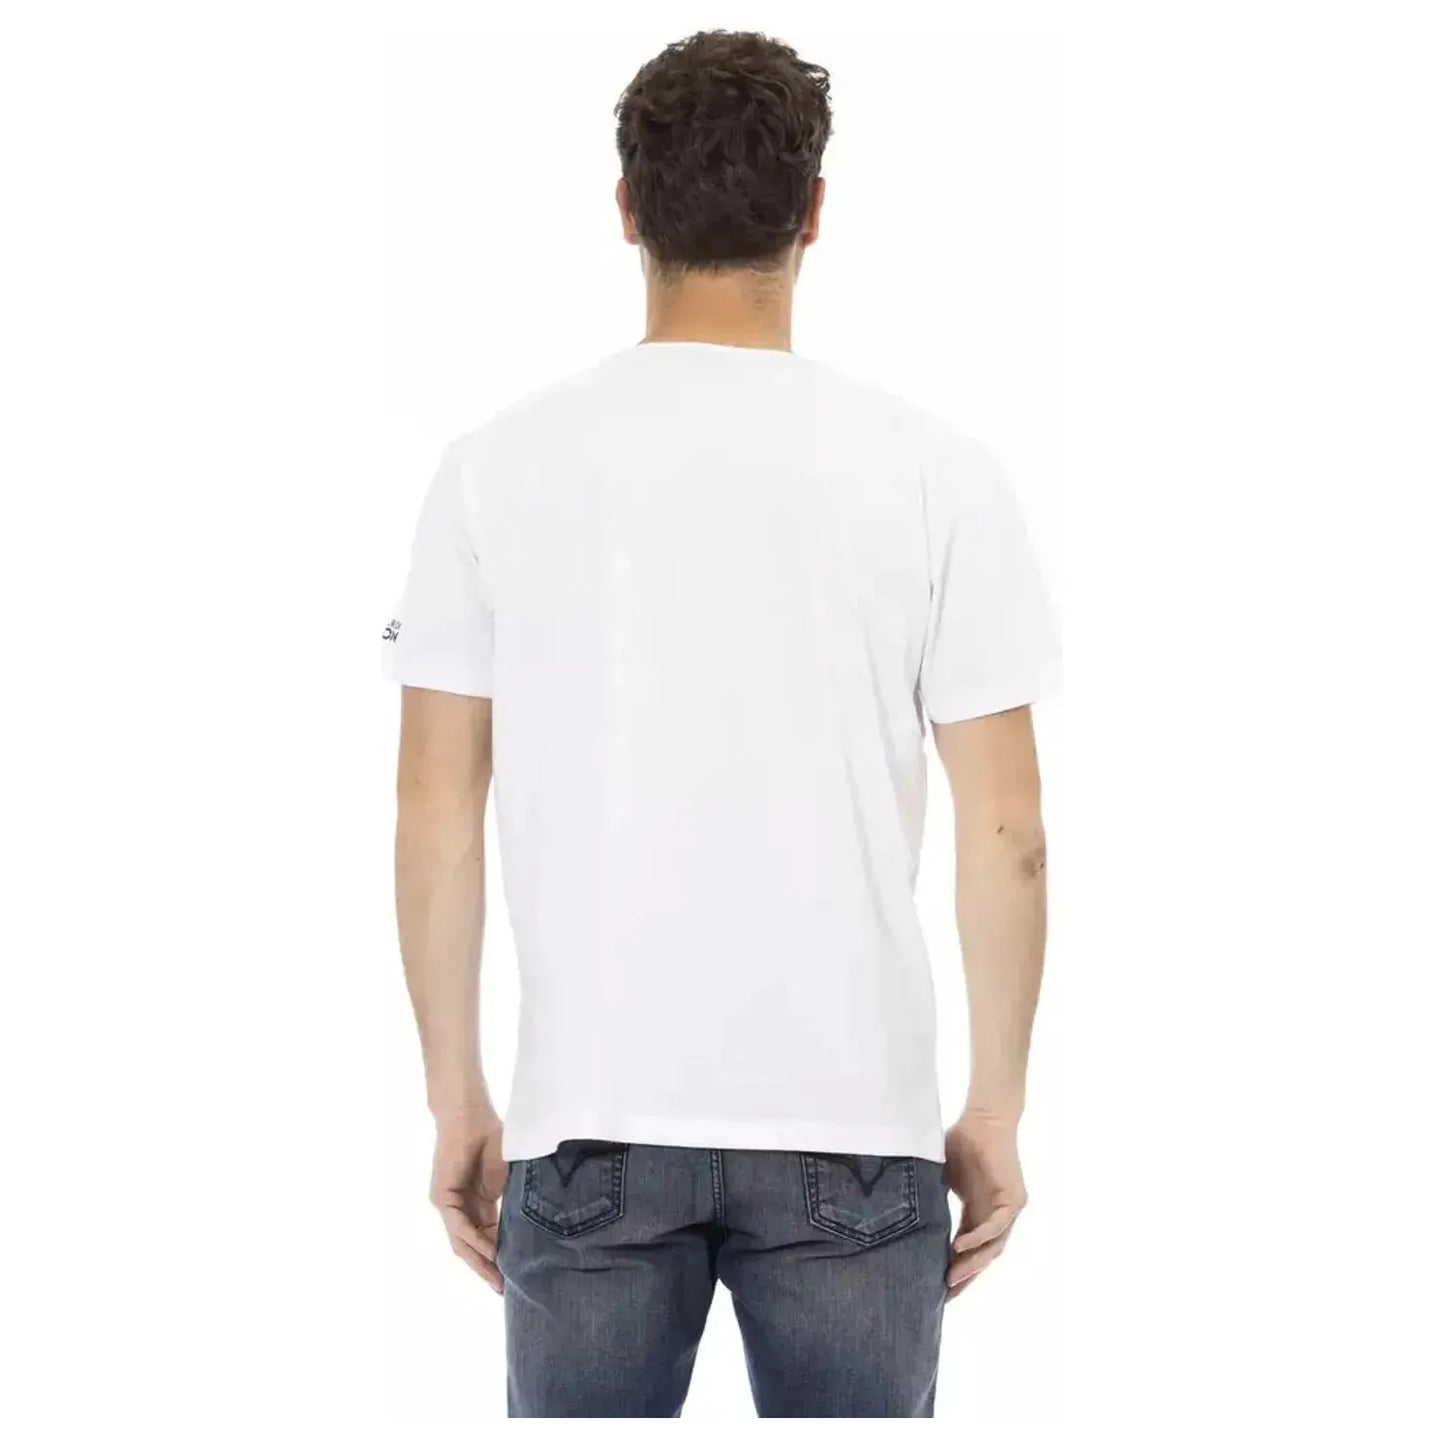 Trussardi Action Elegant White Tee with Graphic Charm white-cotton-t-shirt-95